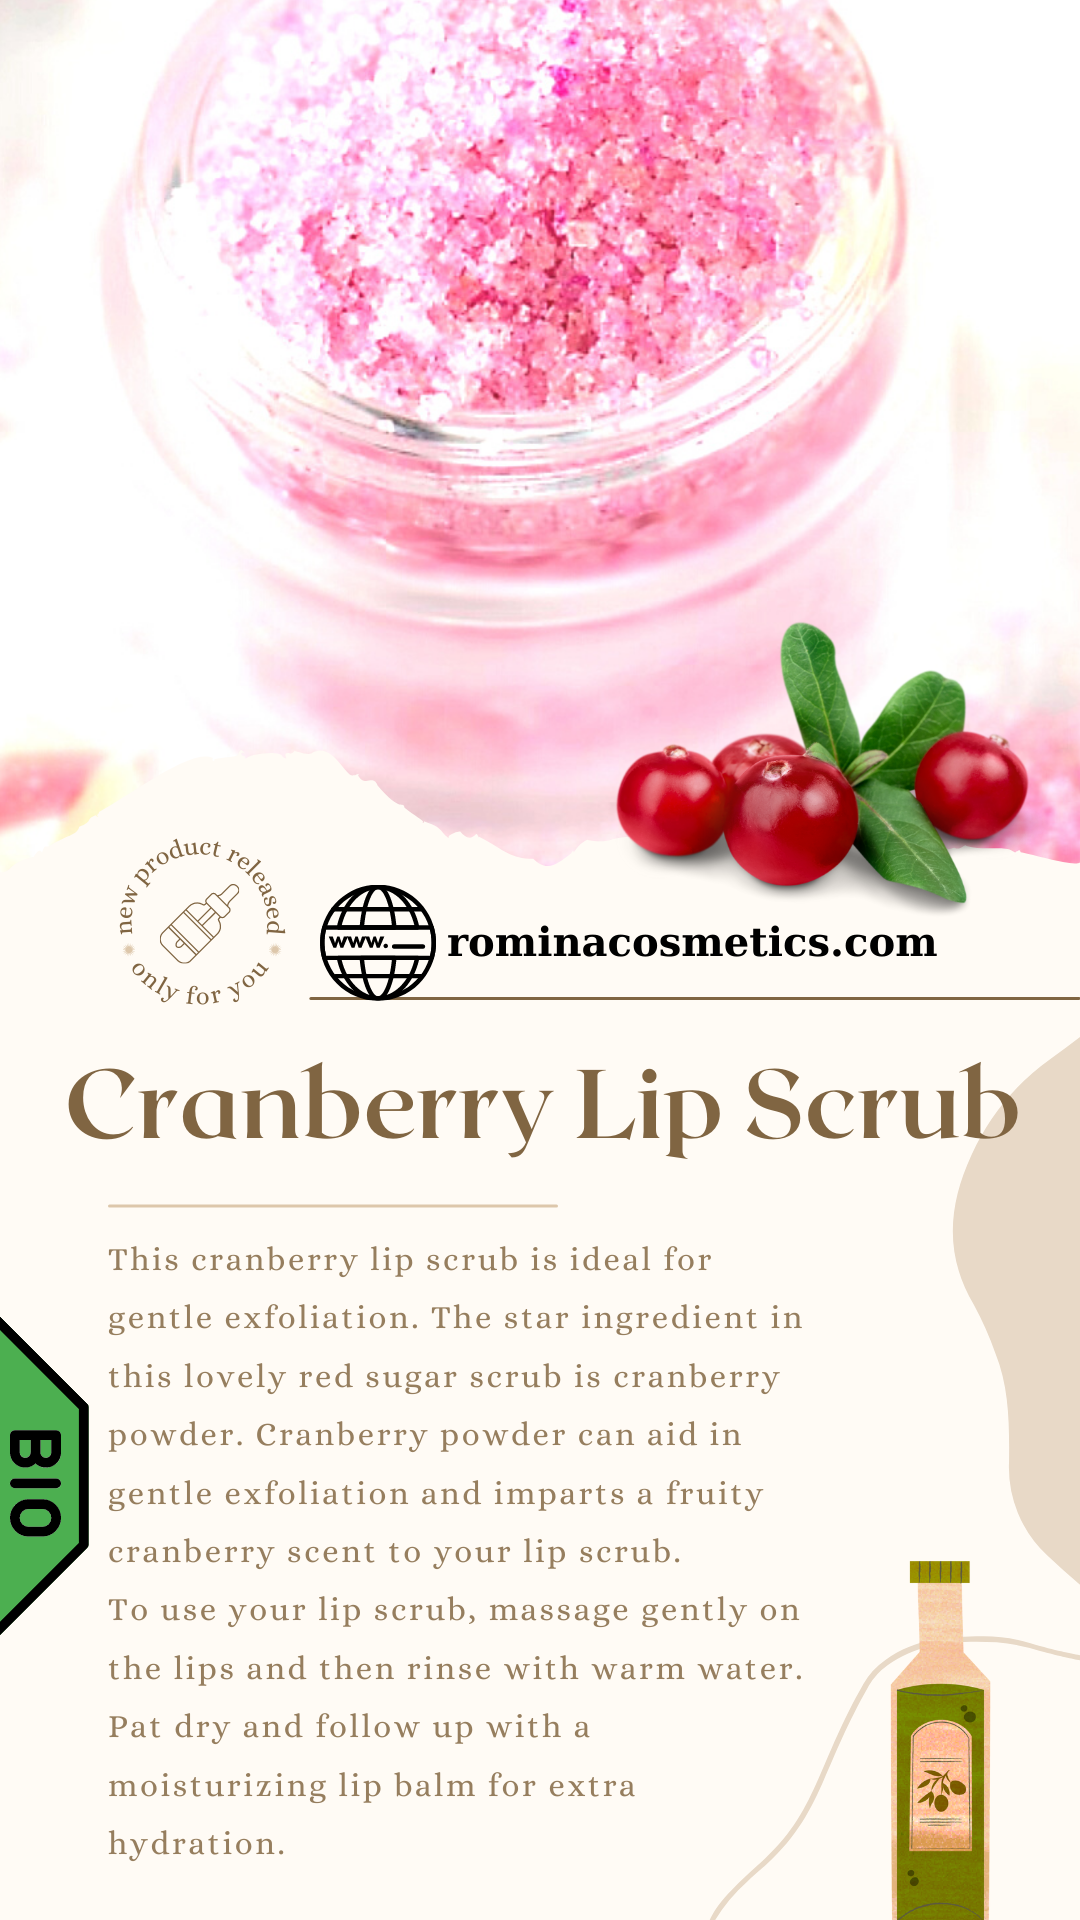 Cranberry Lip Scrub